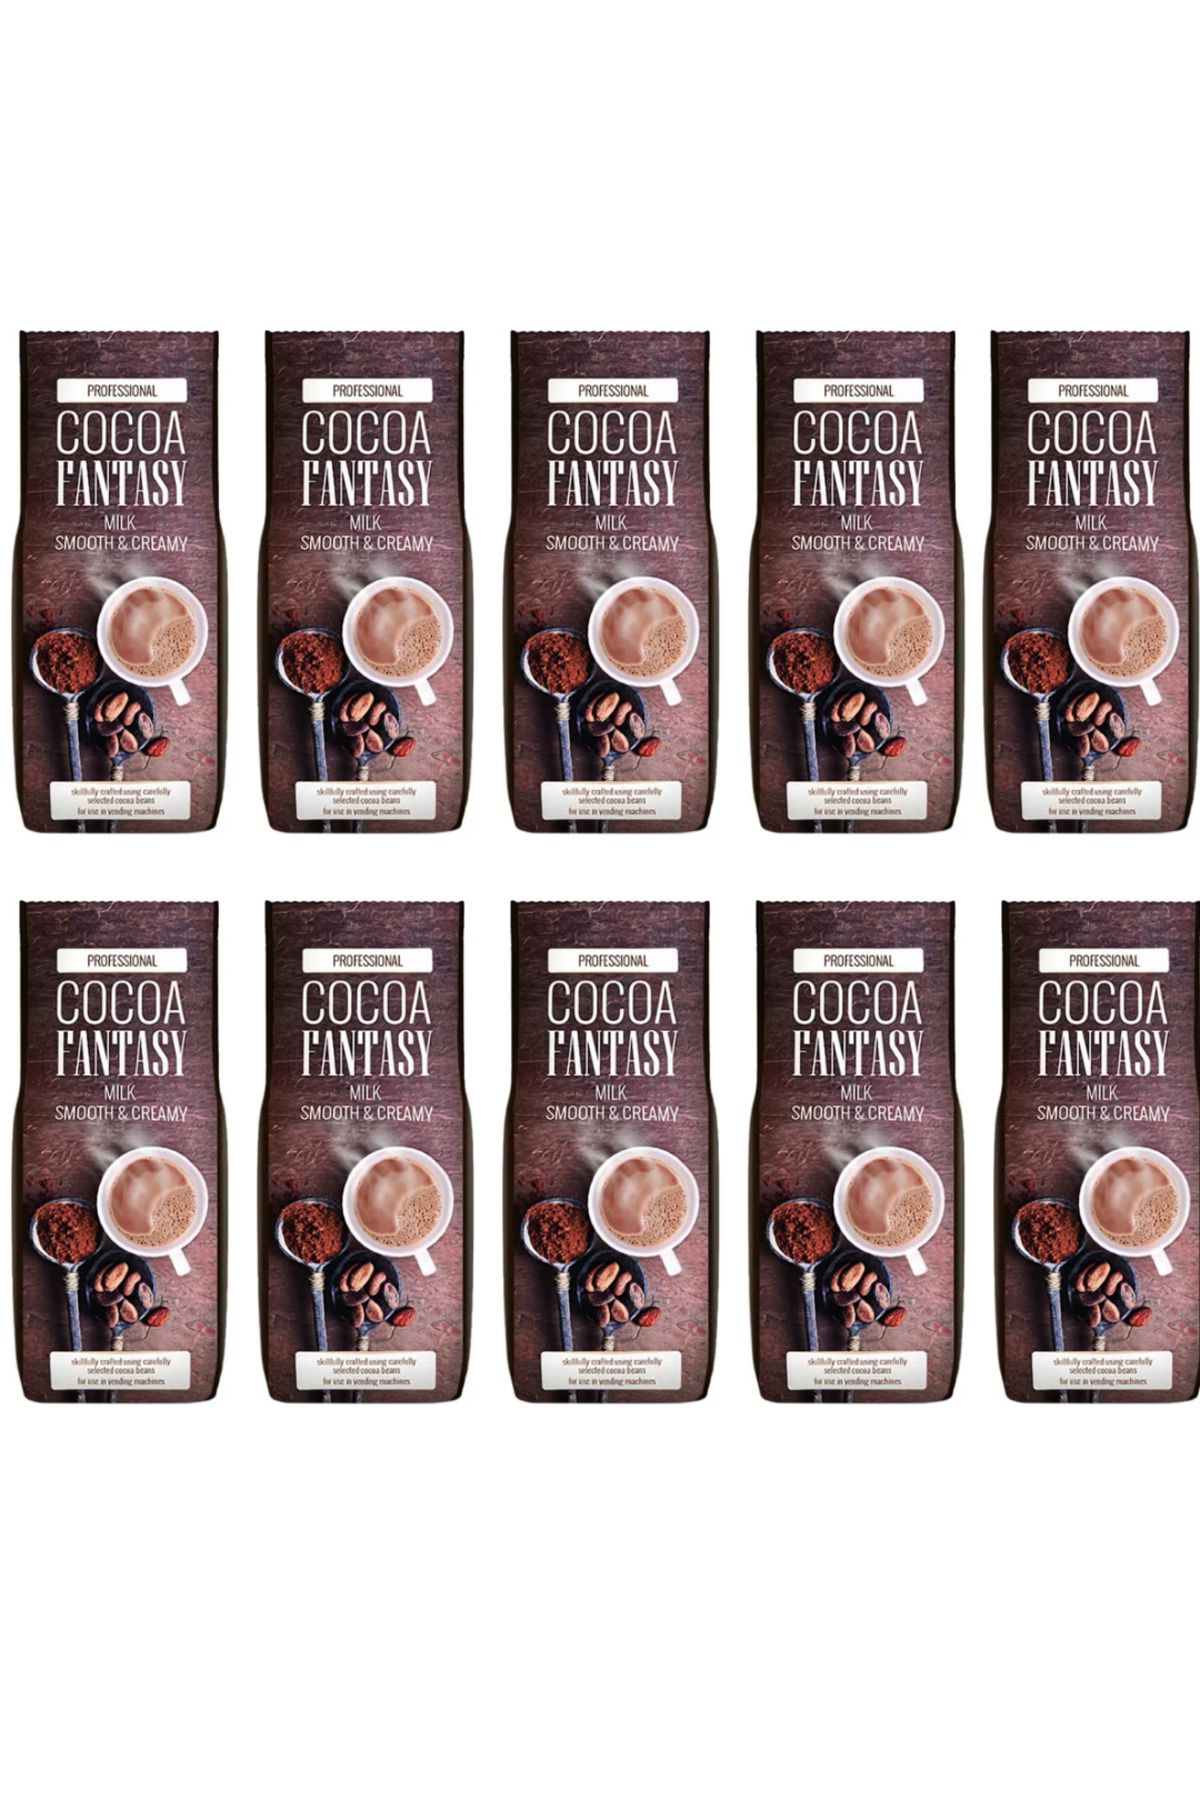 Jacobs Cocoa Fantasy Sıcak Çikolata 1000grx10 Adet (1 KOLİ)